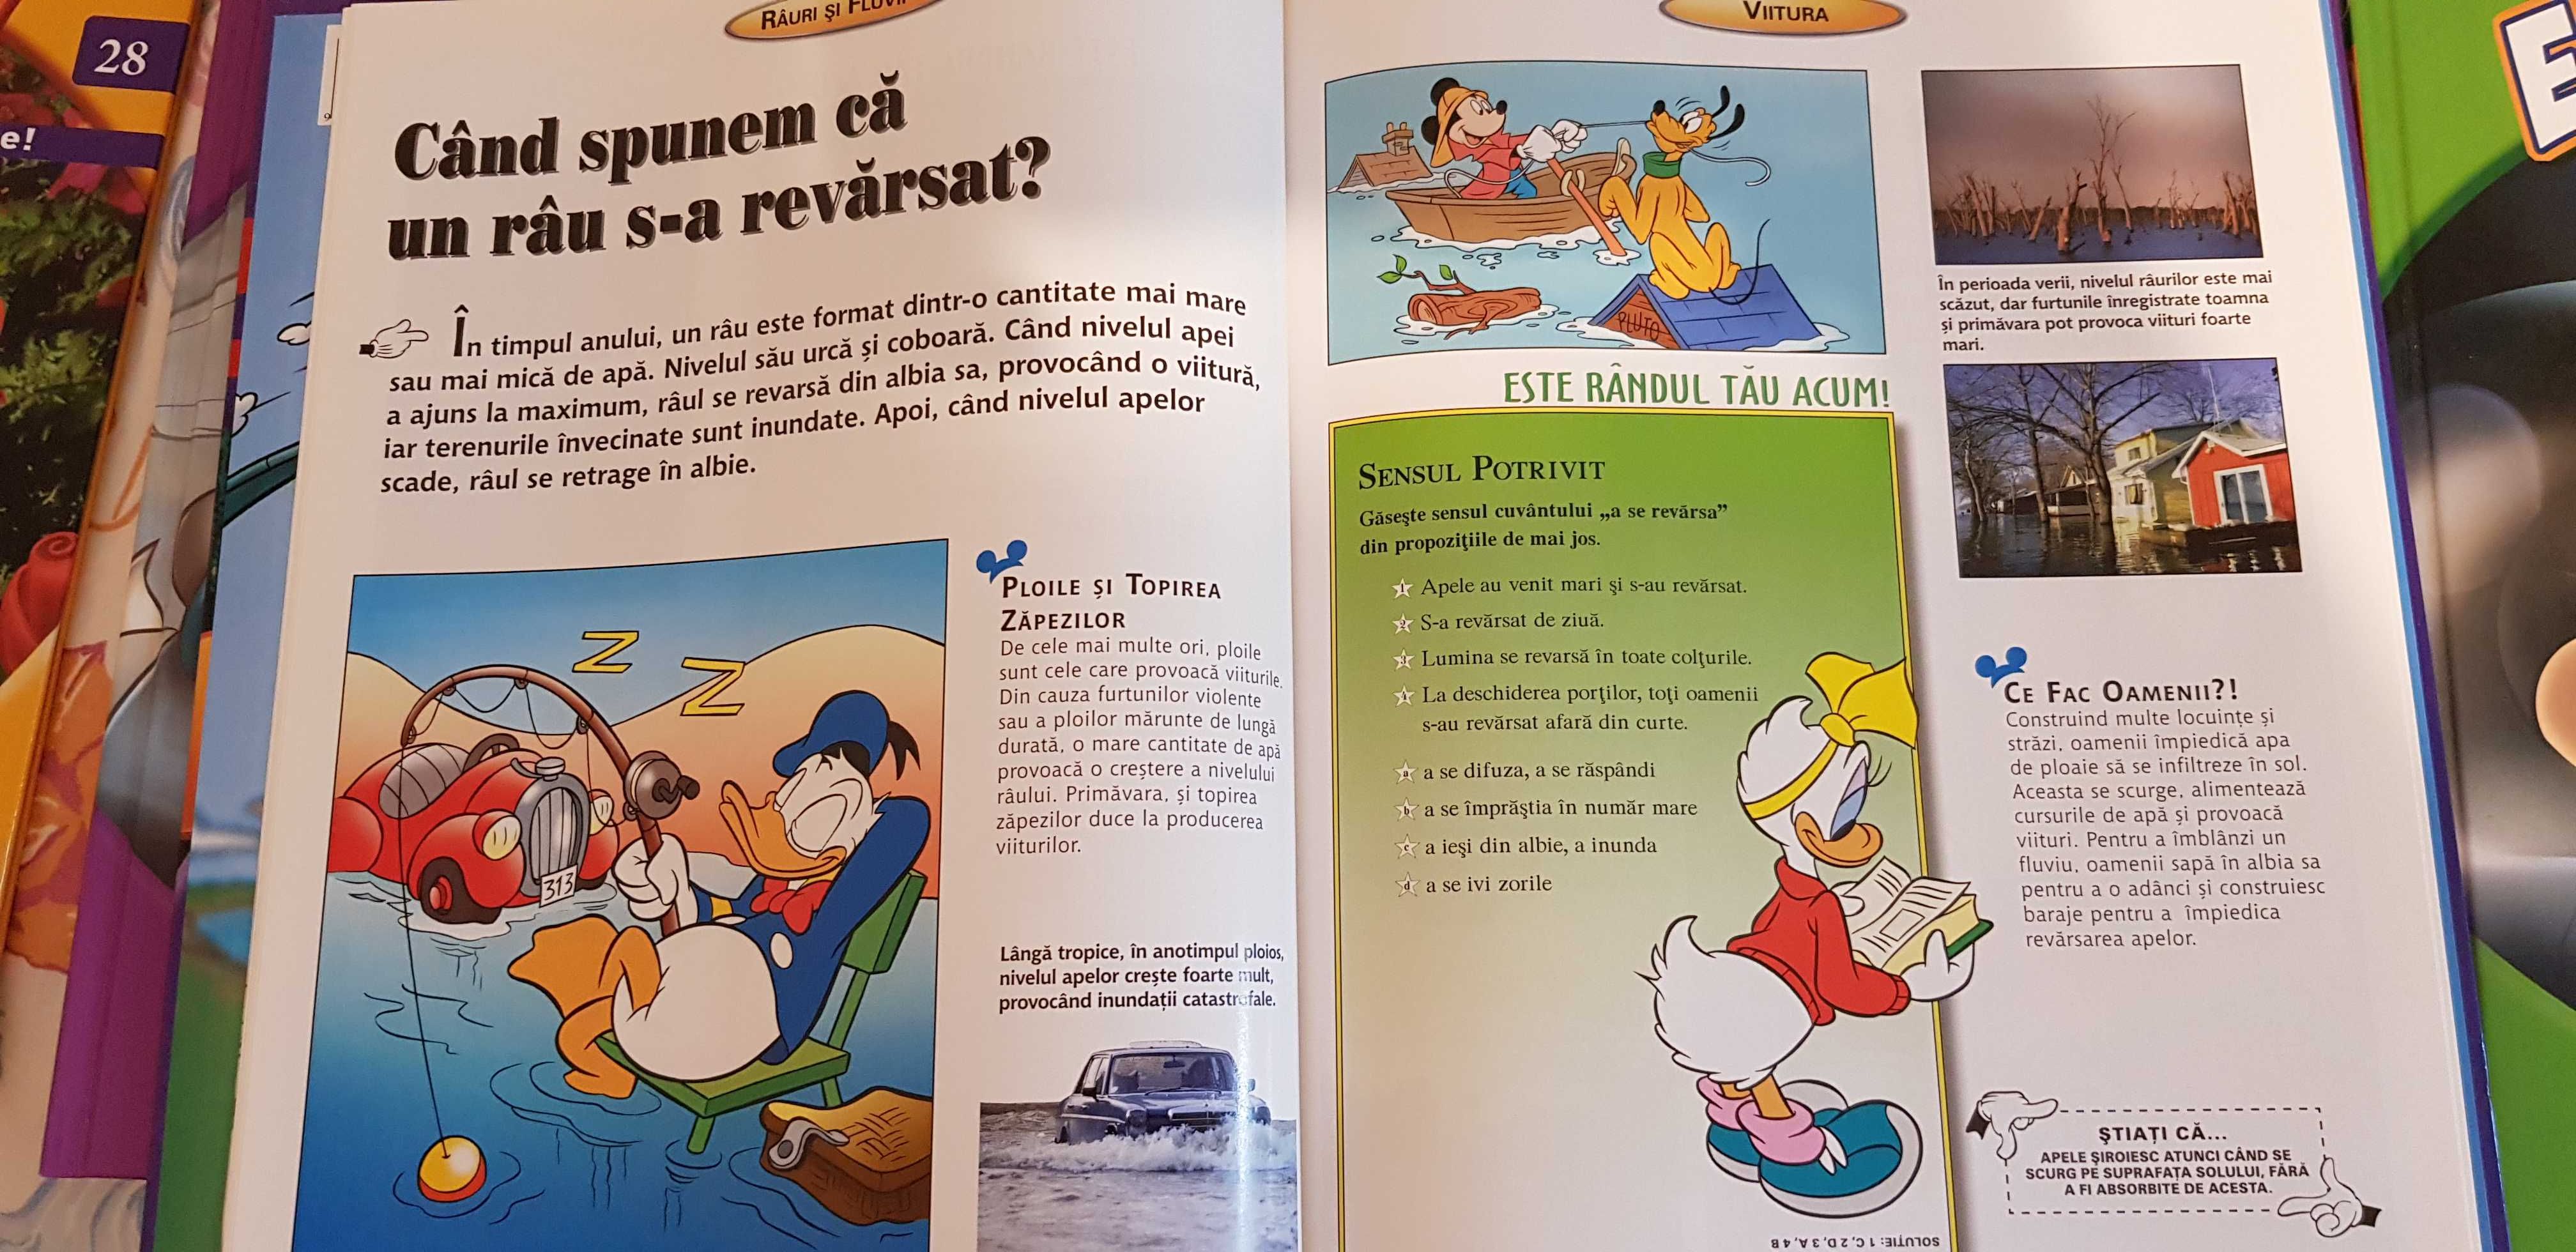 Enciclopedia, Disney-toata colectia -39buc, ed. DeAgostini